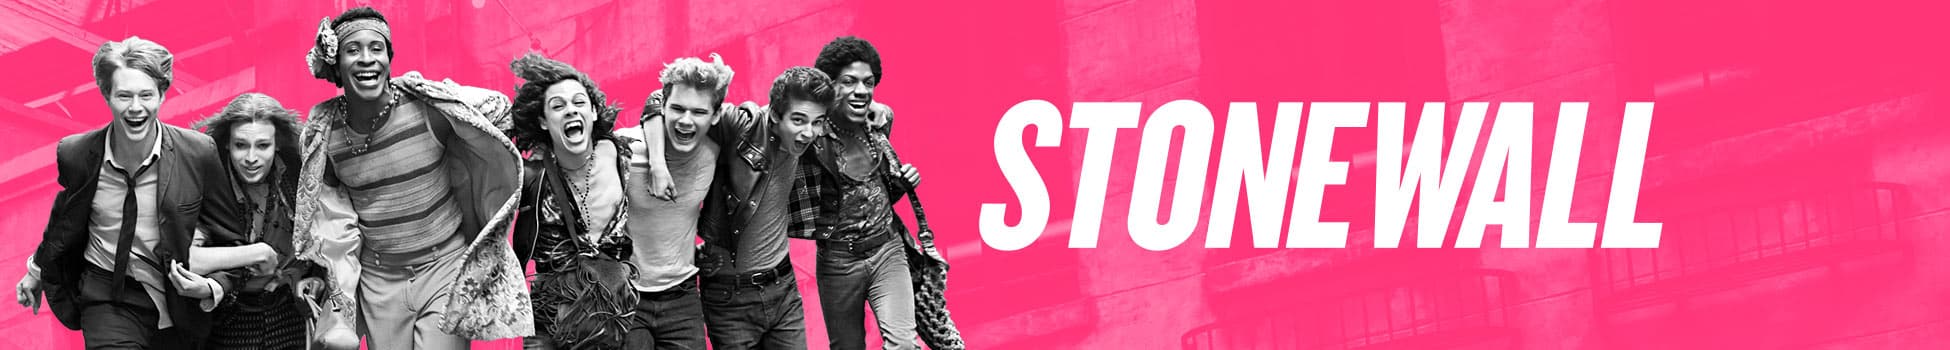 Stonewall - Artwork - Key Visual - Header